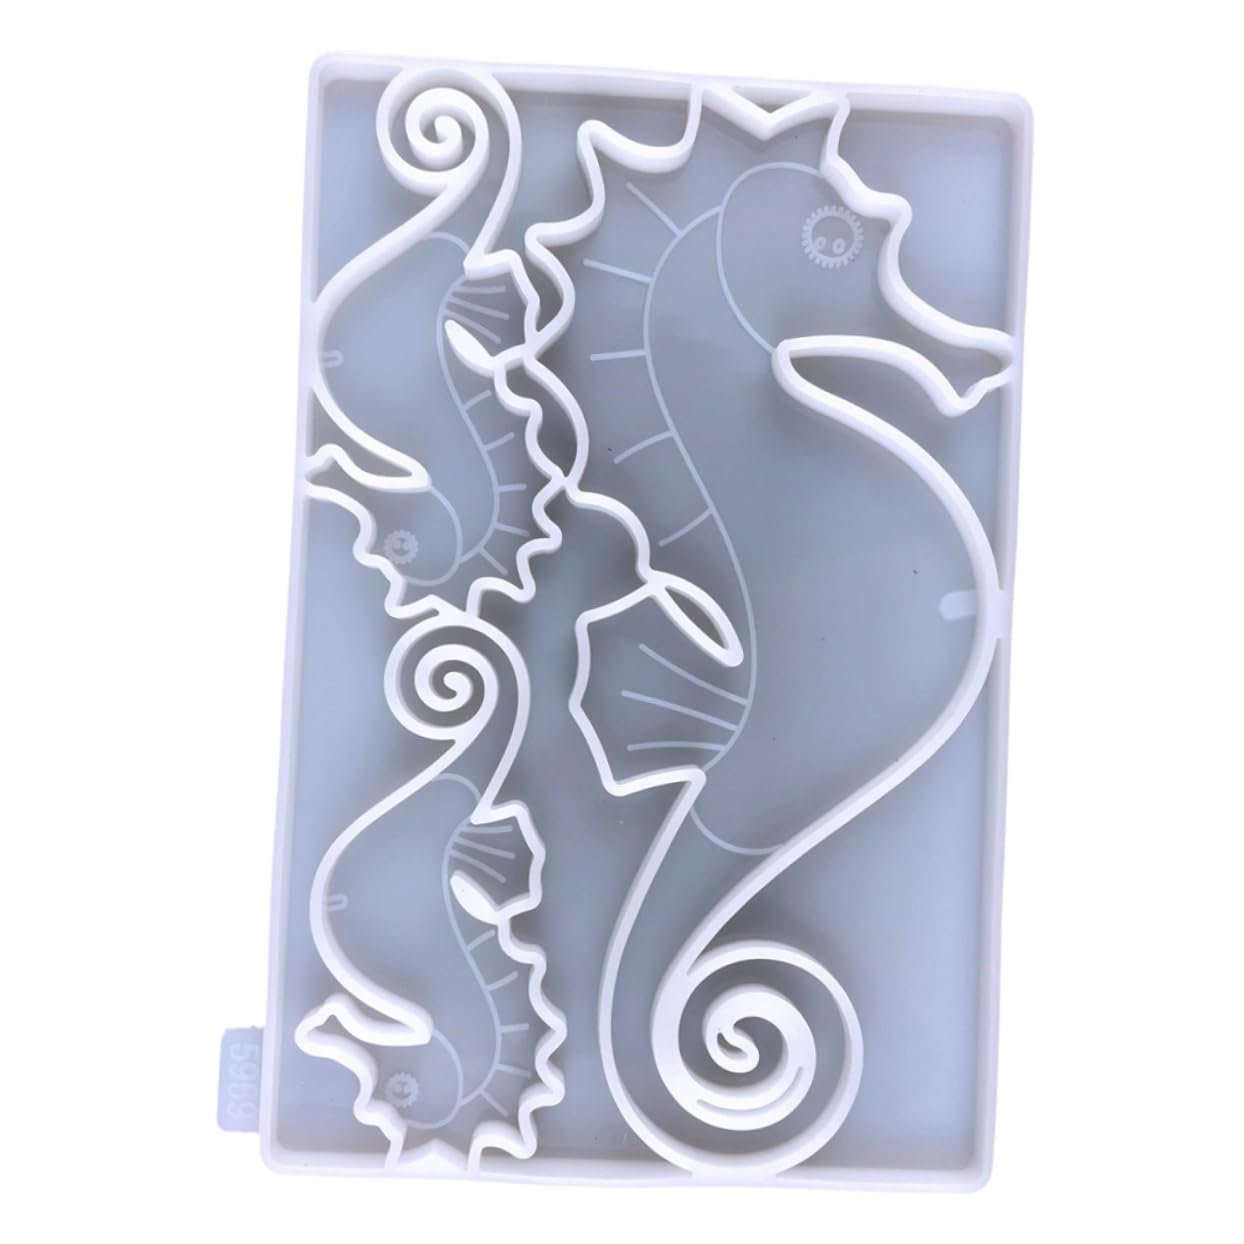 Decorative Mold Soap Molds Resin Molds Silicone Epoxy Silicone Molds Lets Resin Home Decor DIY Wall Ornament Mold Animal Pendant Mold DIY Mold White Large Gecko Silica Gel 3D